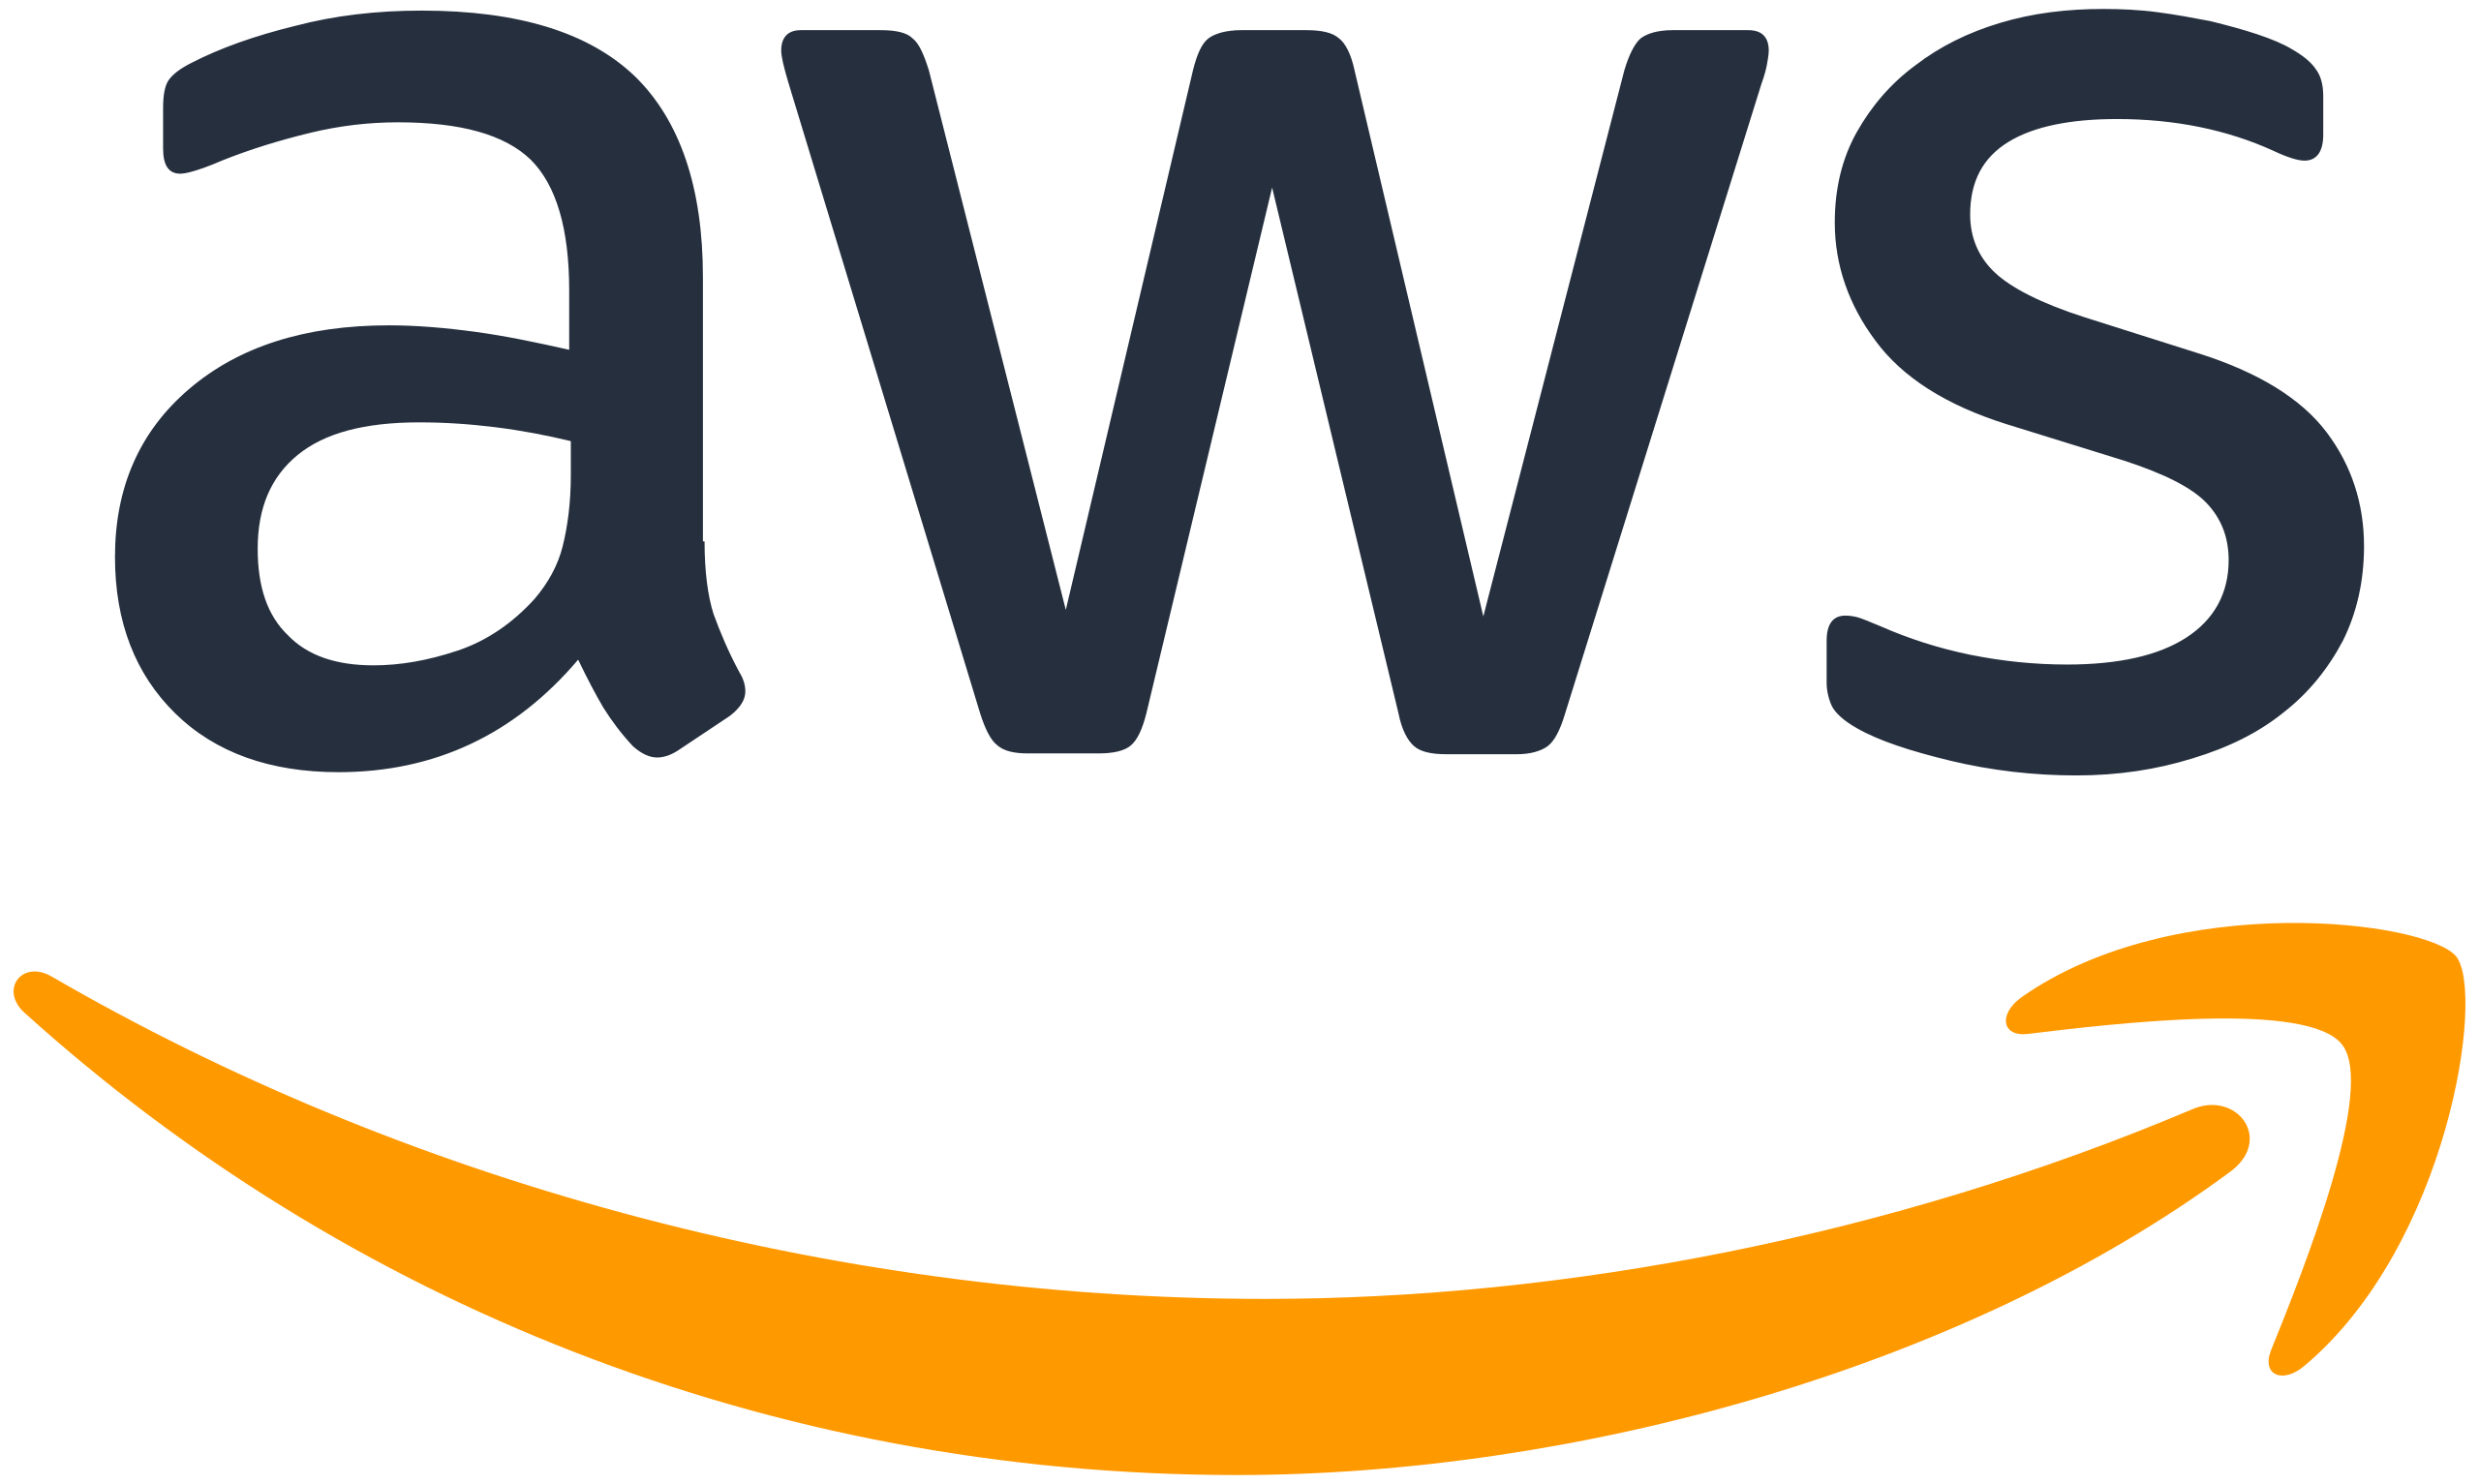 2560px-Amazon_Web_Services_Logo.svg